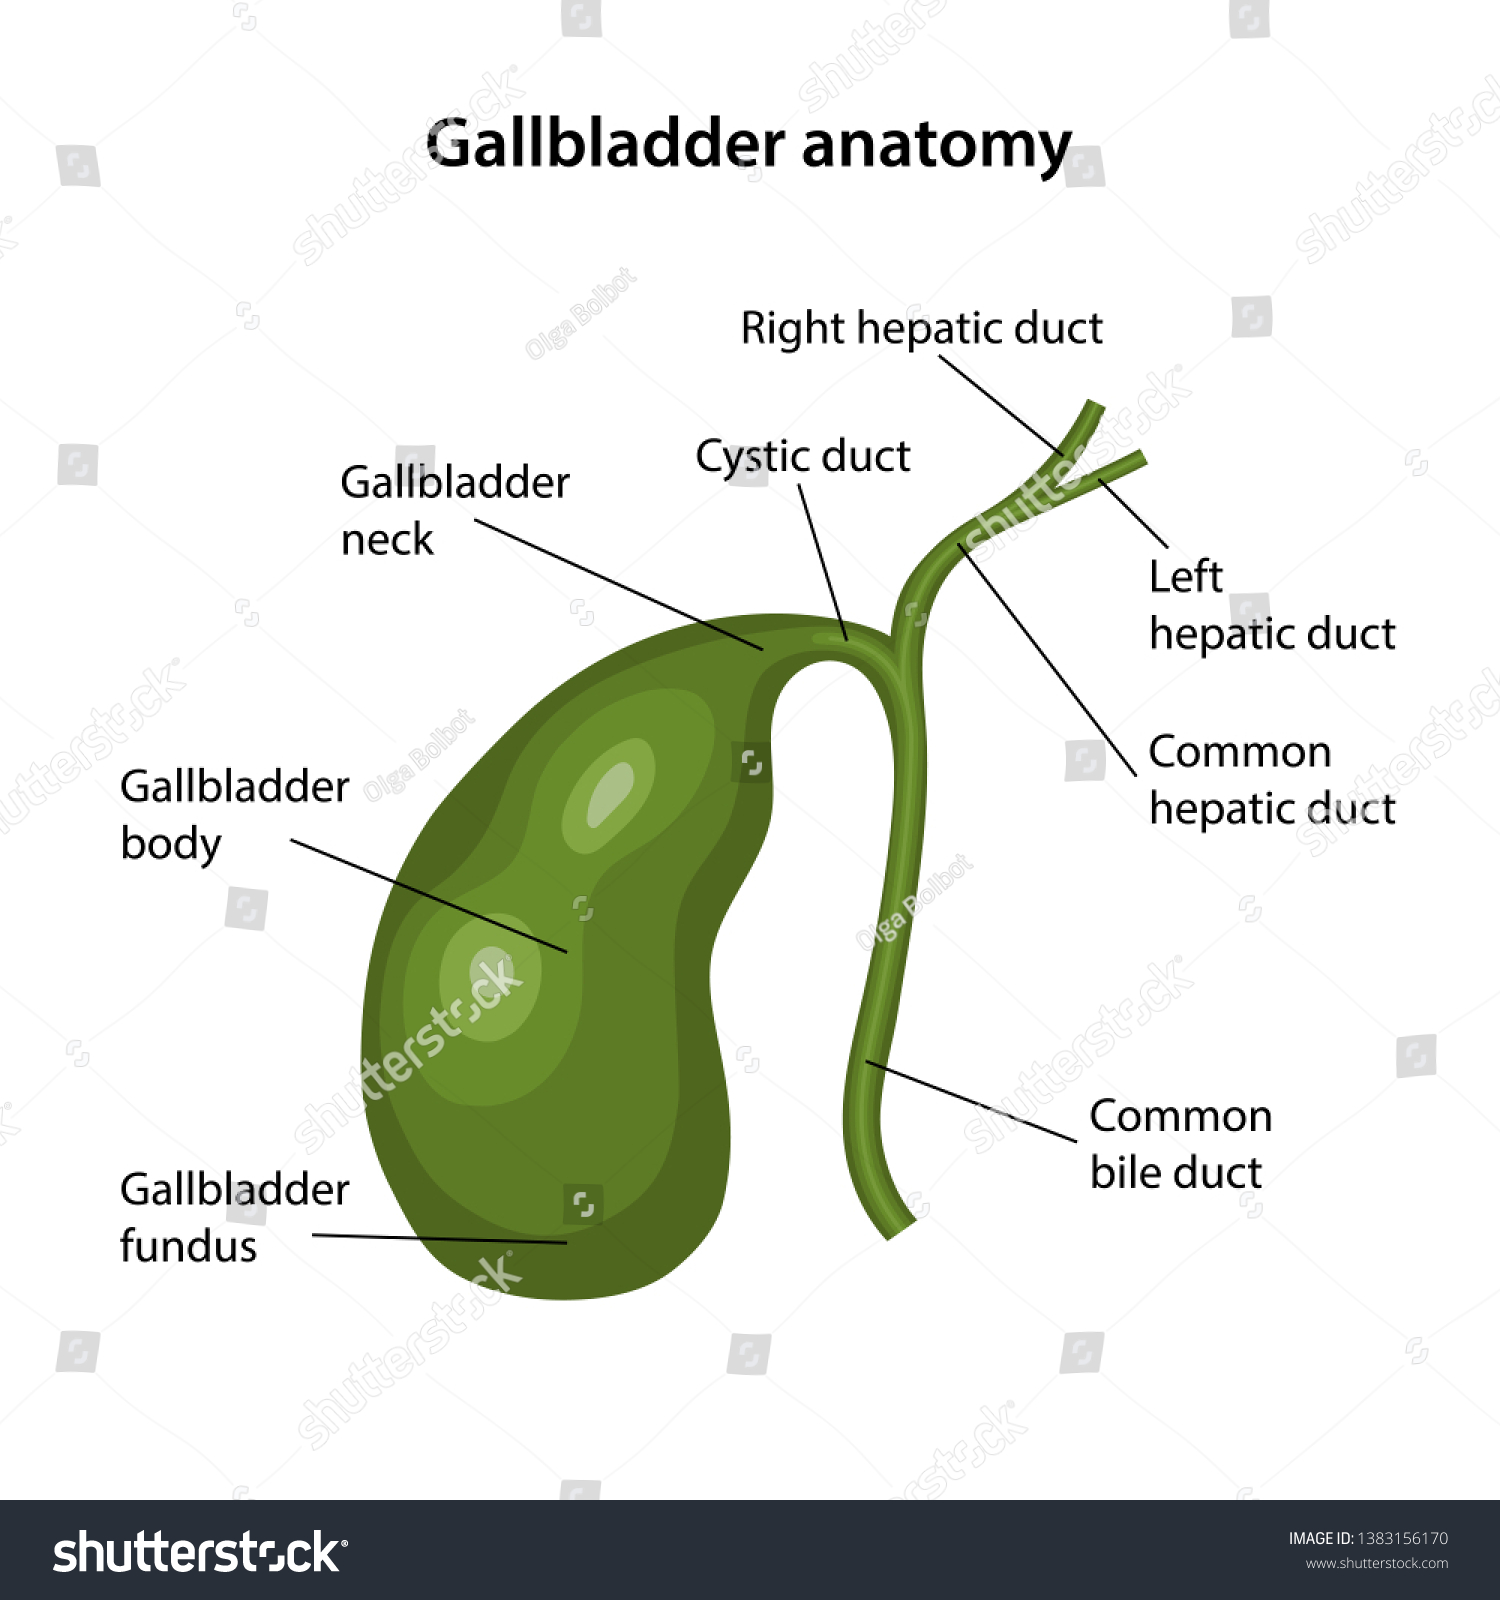 Gallbladder Gallbladder and